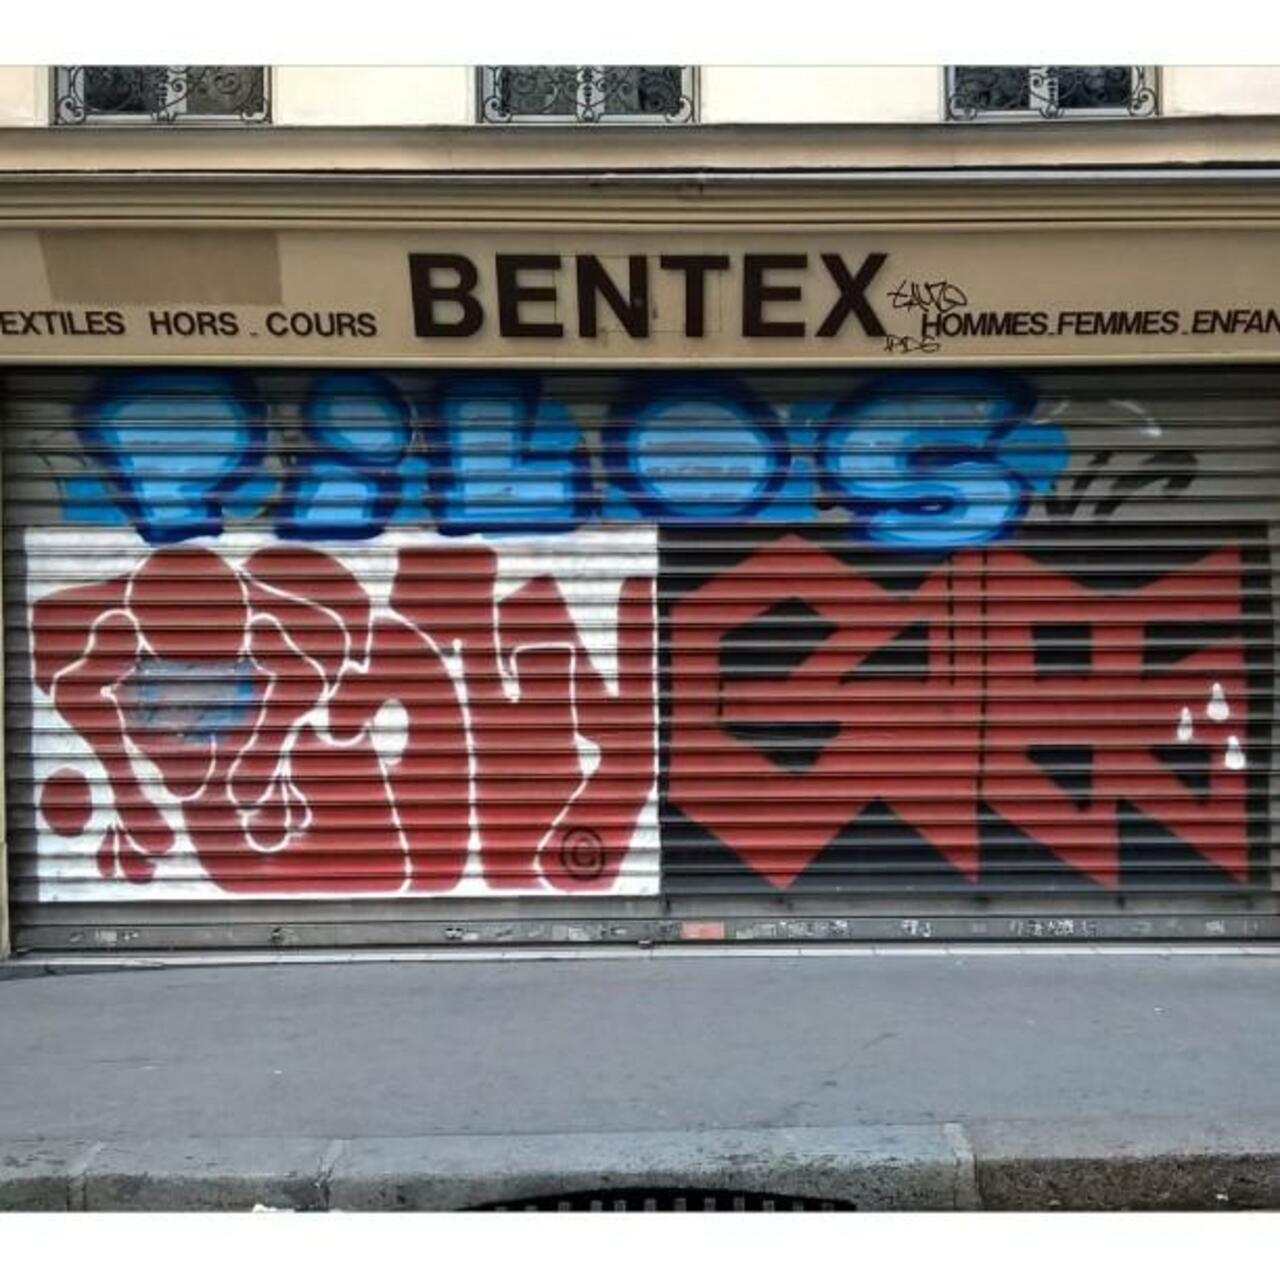 #Paris #graffiti photo by maxdimontemarciano http://ift.tt/1VF9D15 #StreetArt http://t.co/cTZ4mHFaUs https://goo.gl/7kifqw